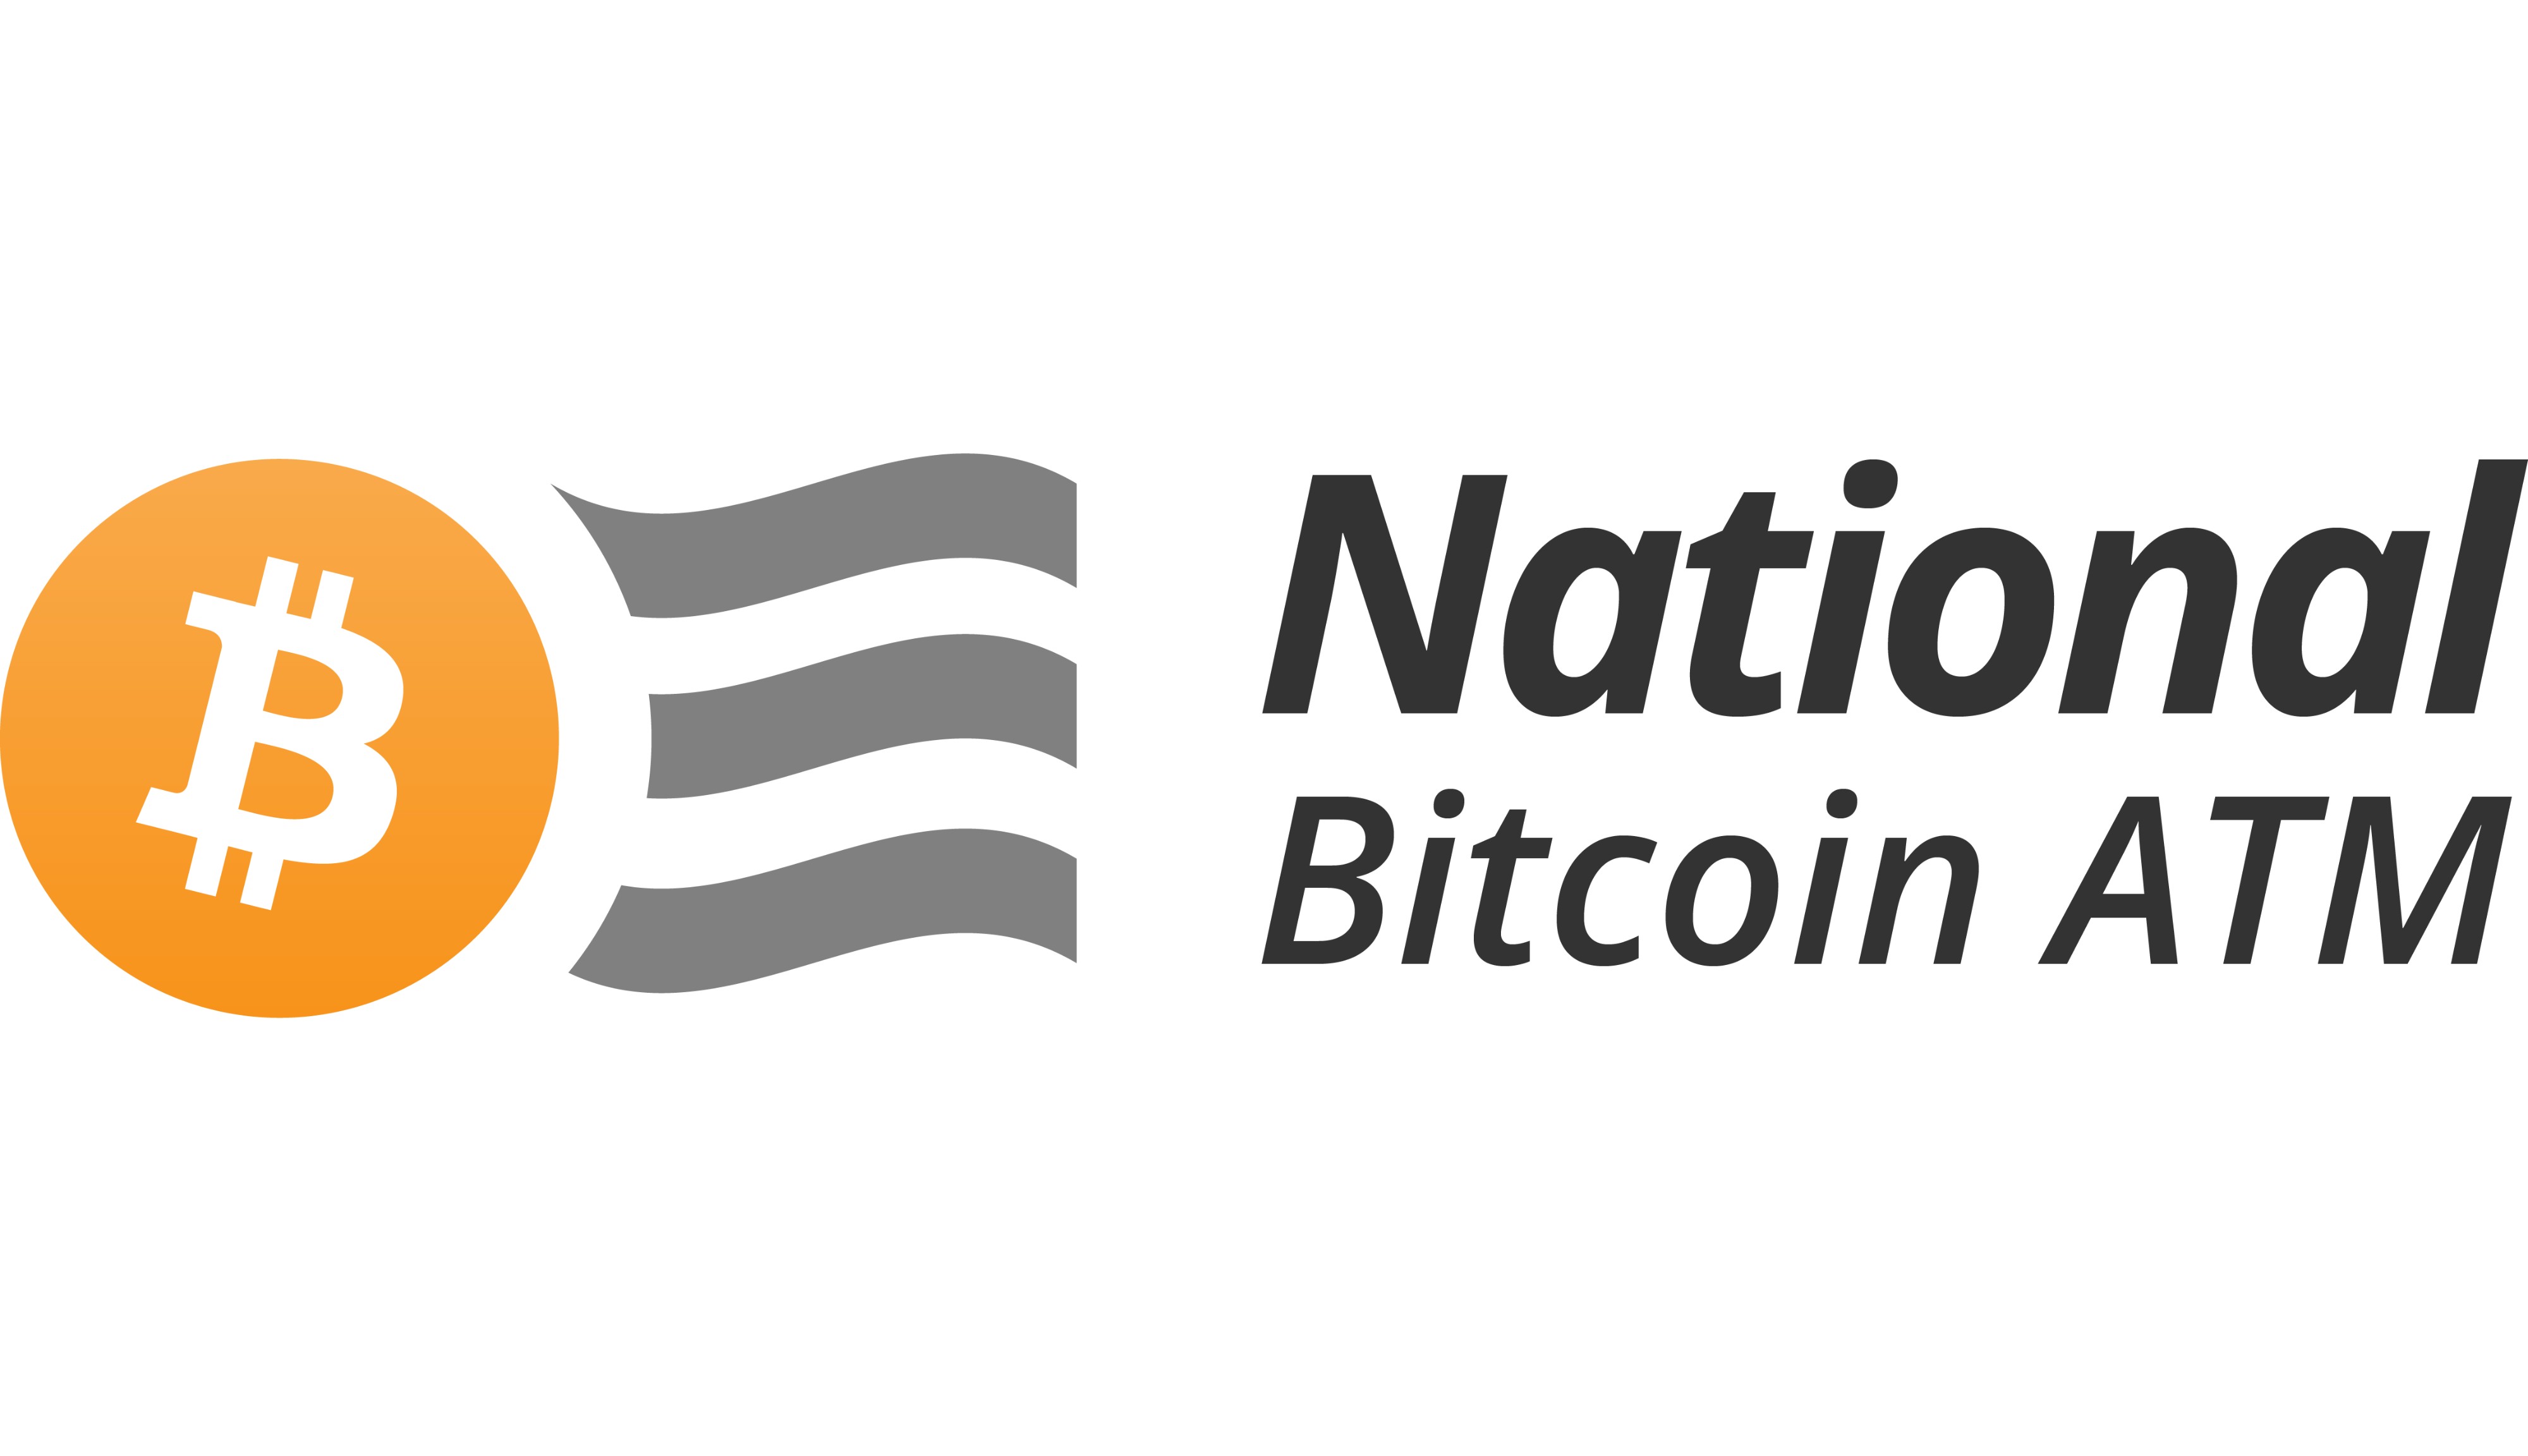 National bitcoin atm monero wallets online